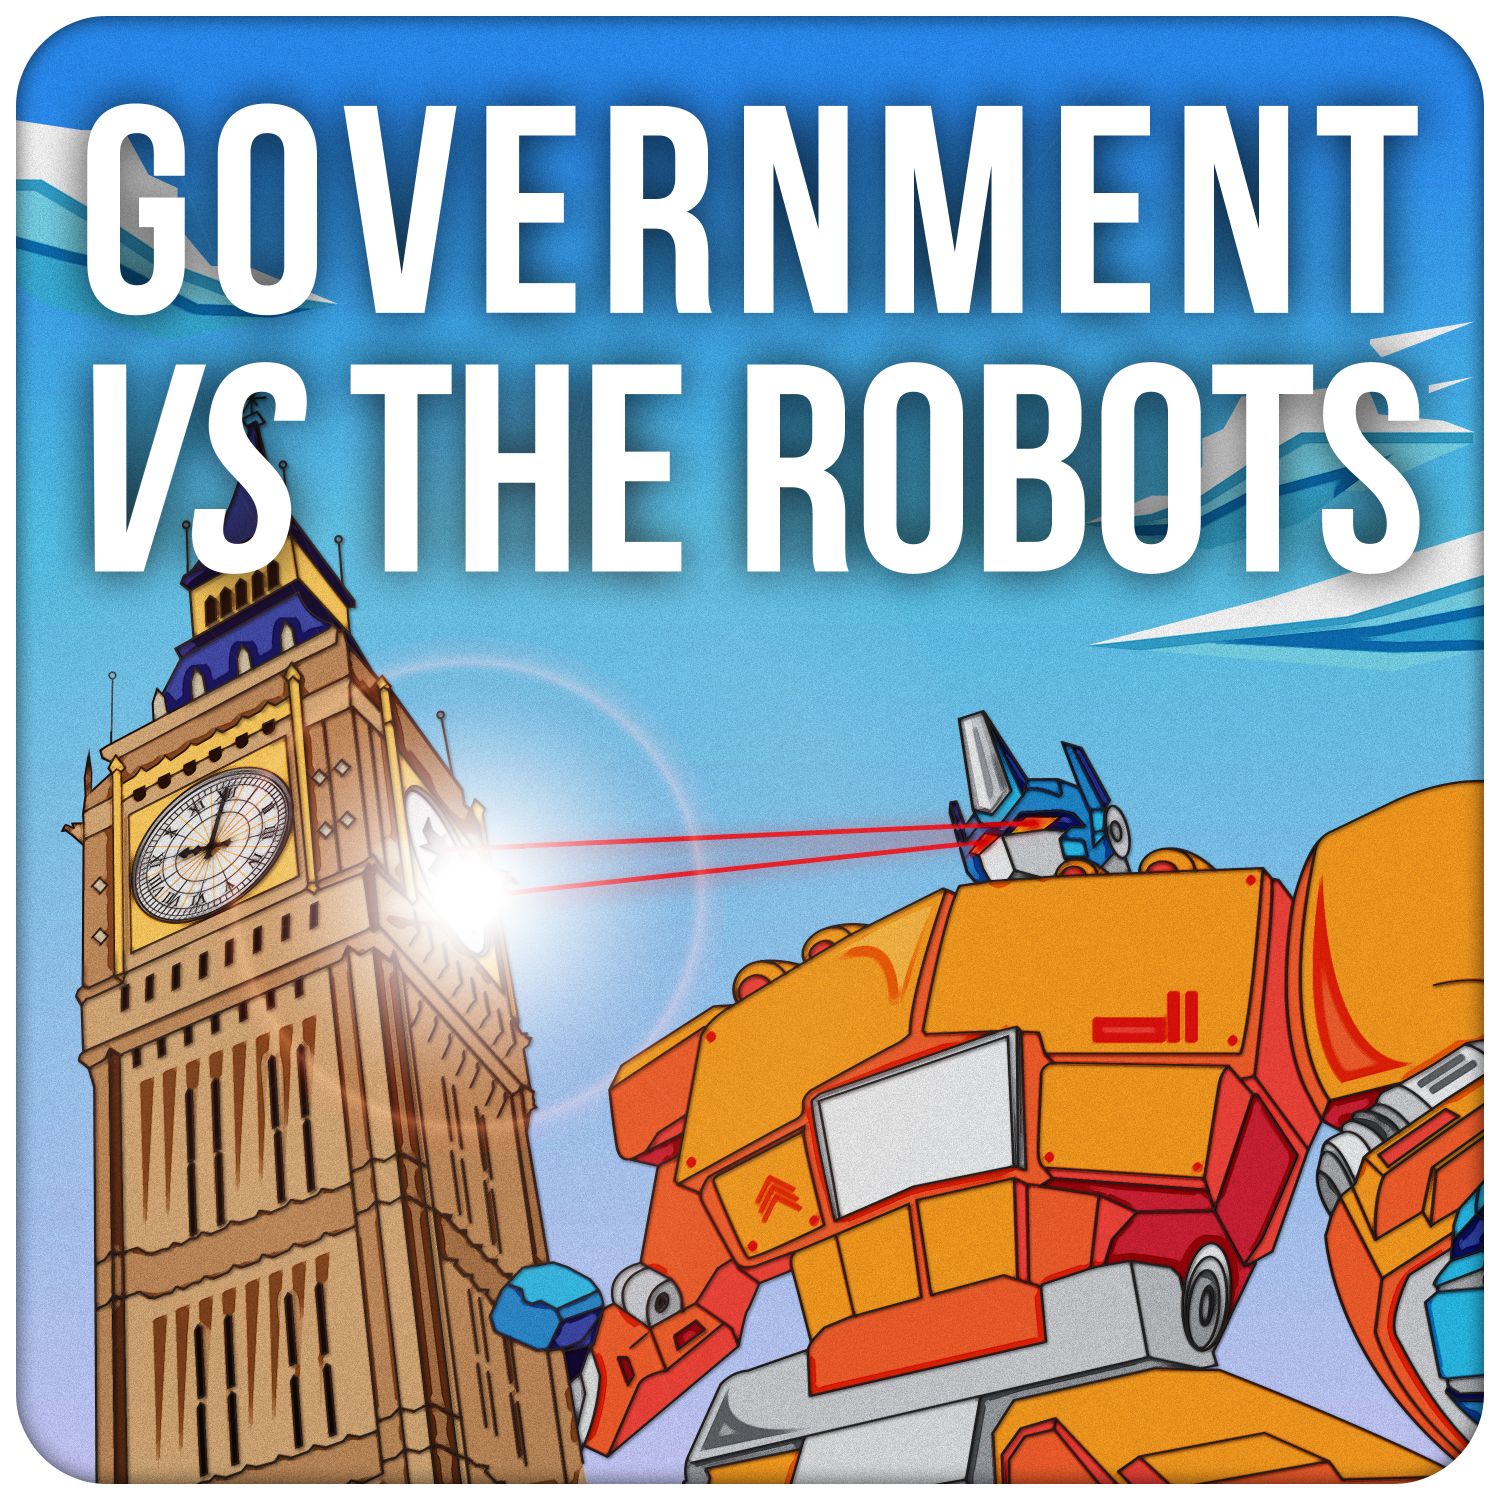 Government vs The Robots